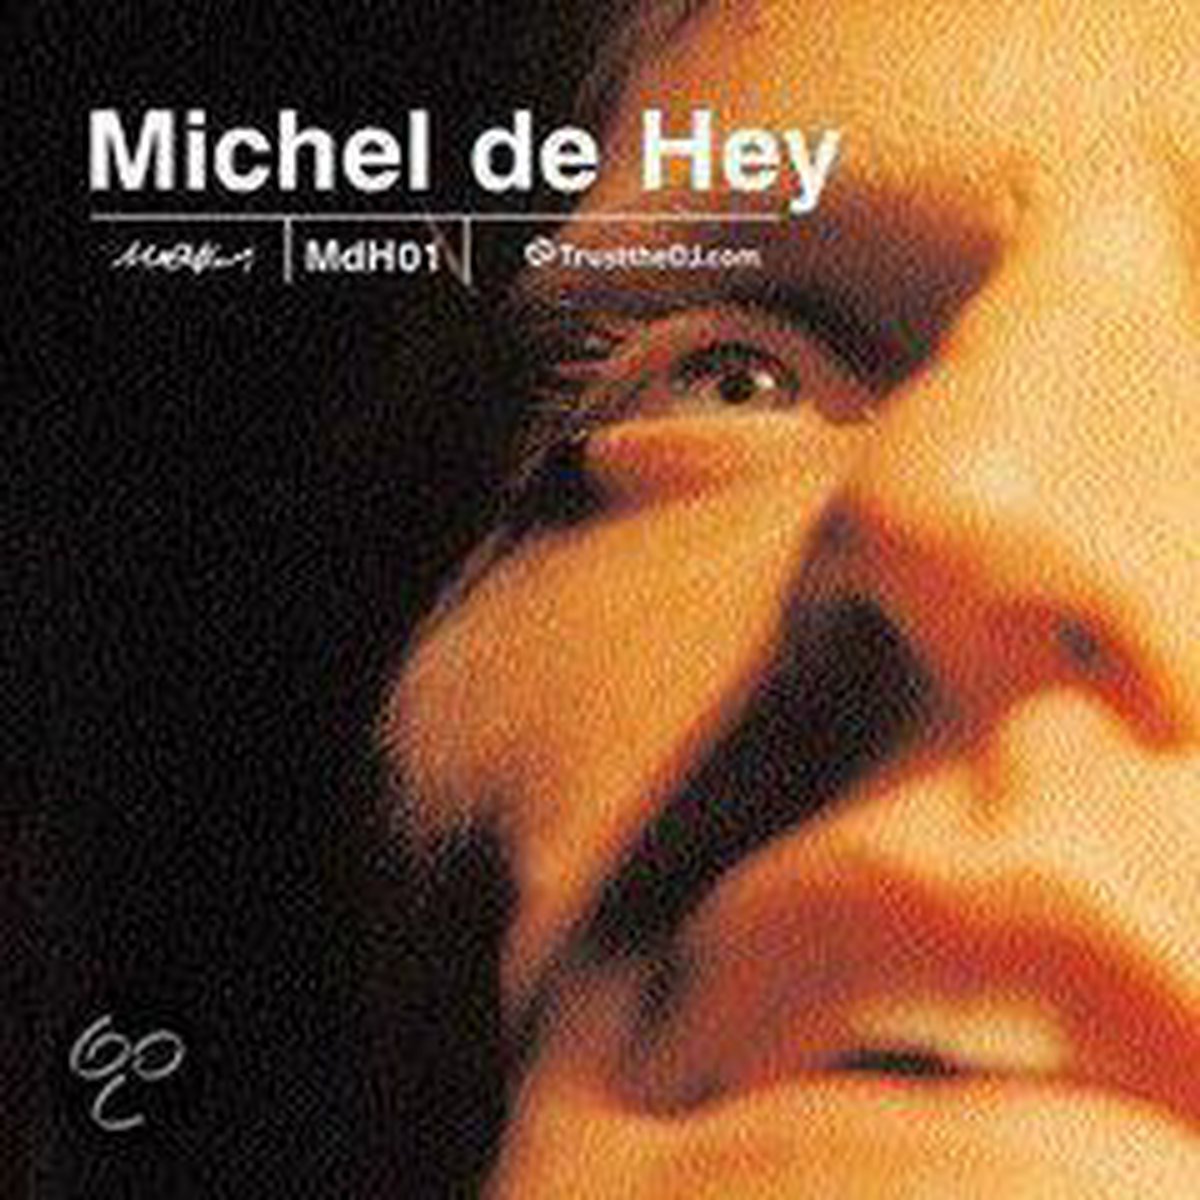 Trust the DJ: MDH01 - Michel de Hey